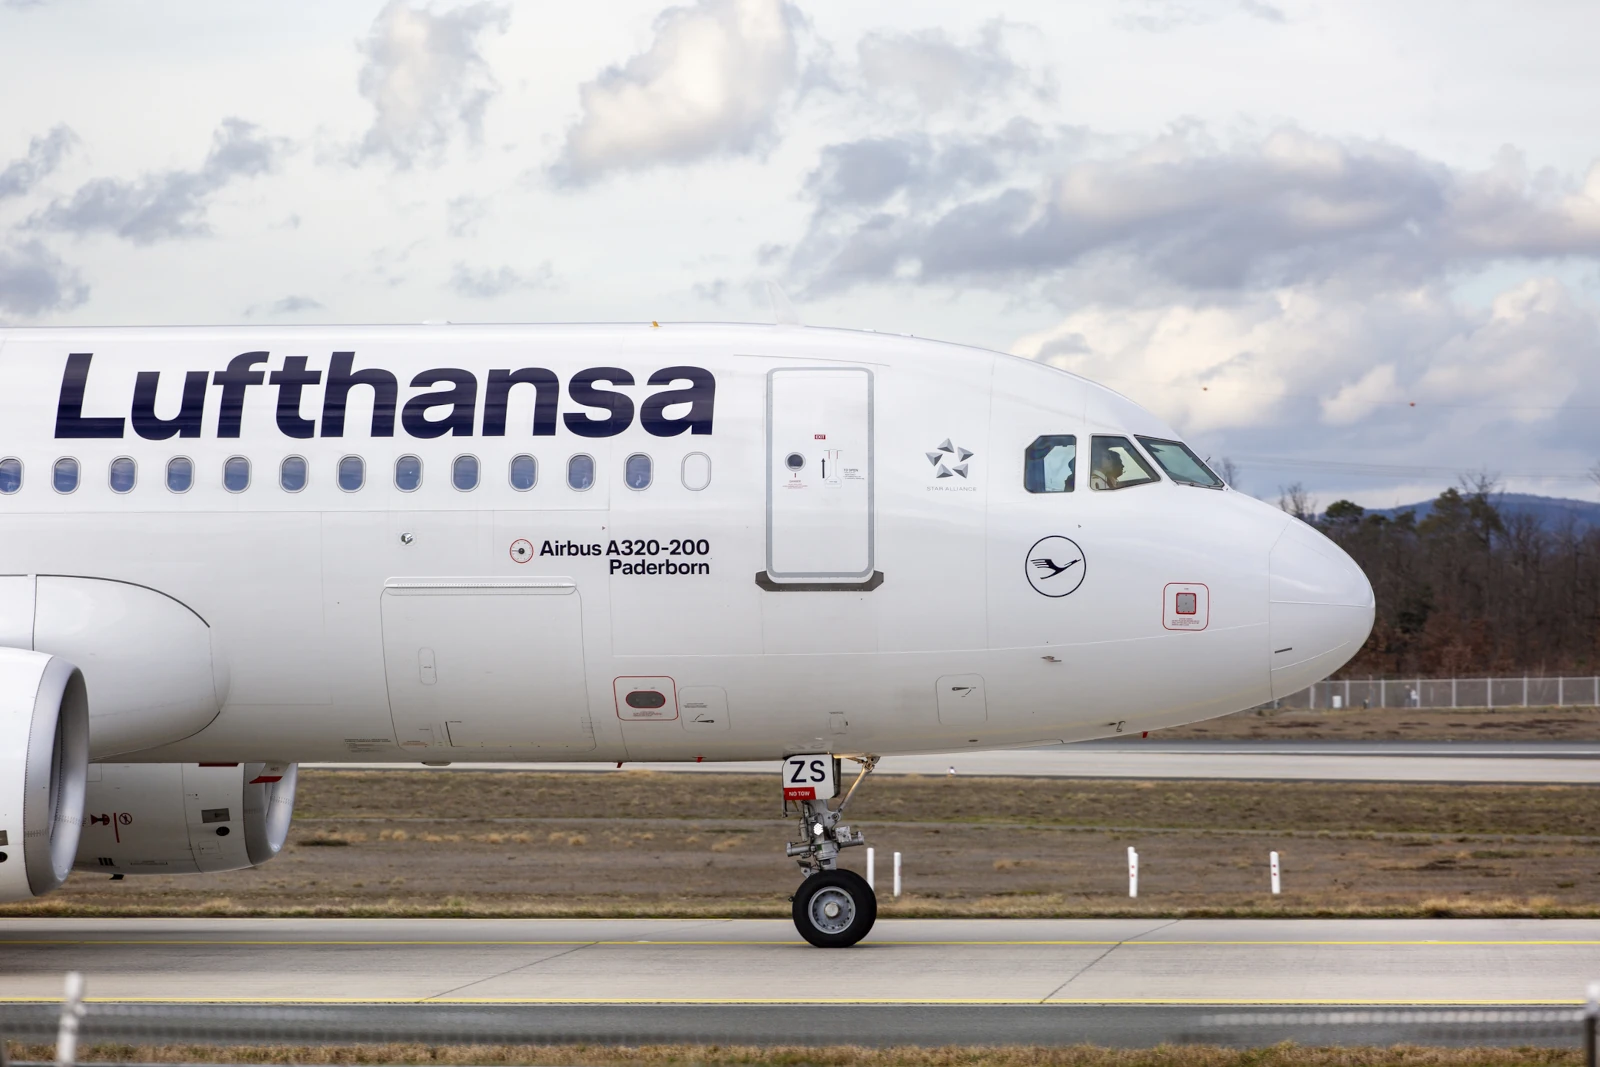 Lufthansa Airbus A320-200 Paderborn